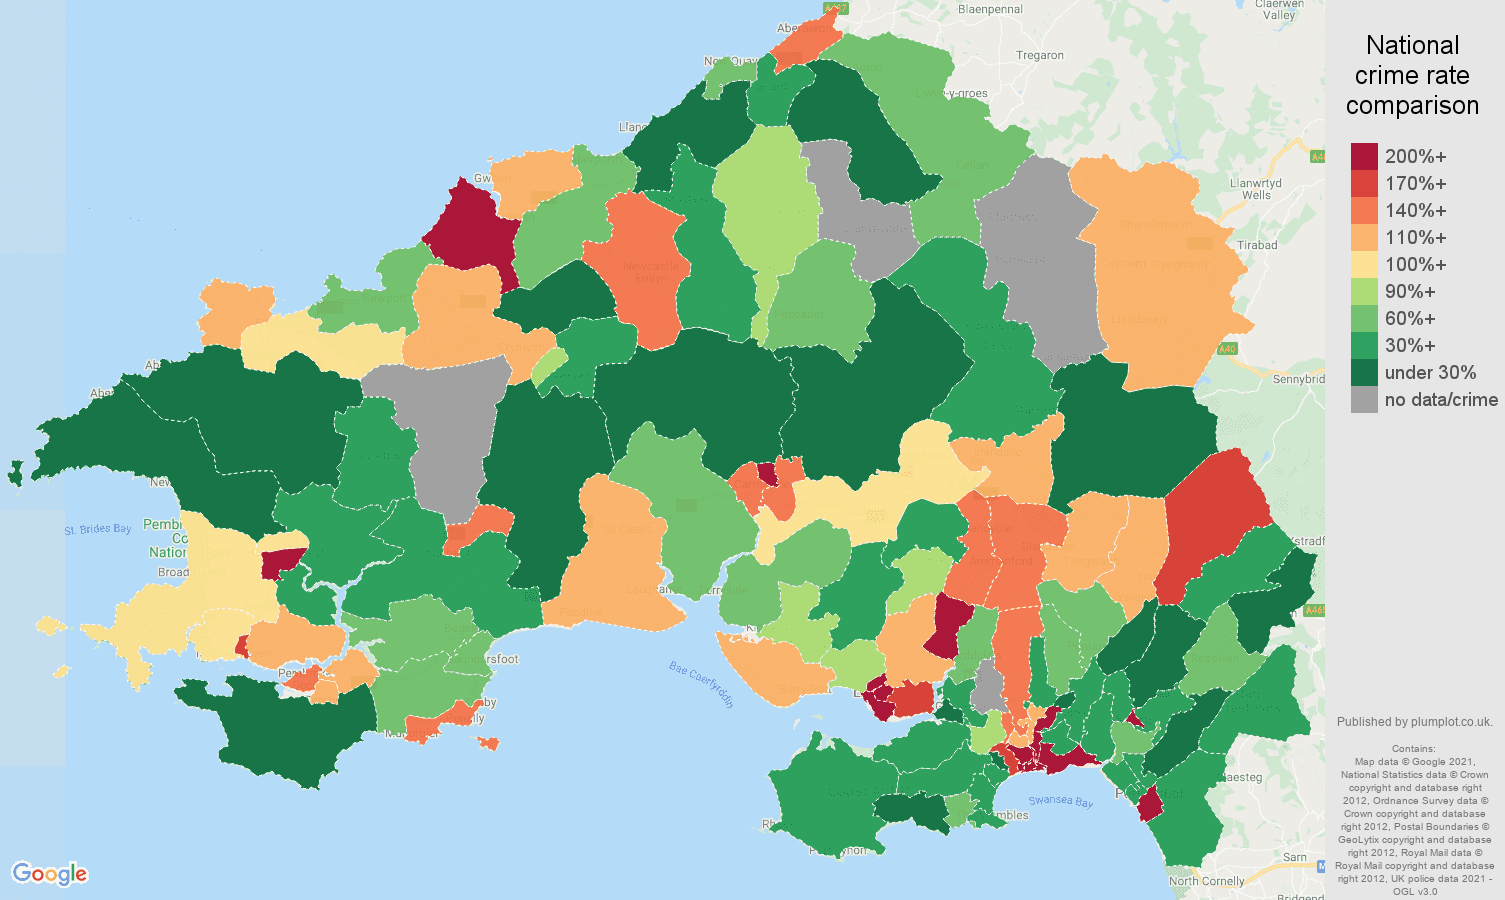 Swansea drugs crime rate comparison map